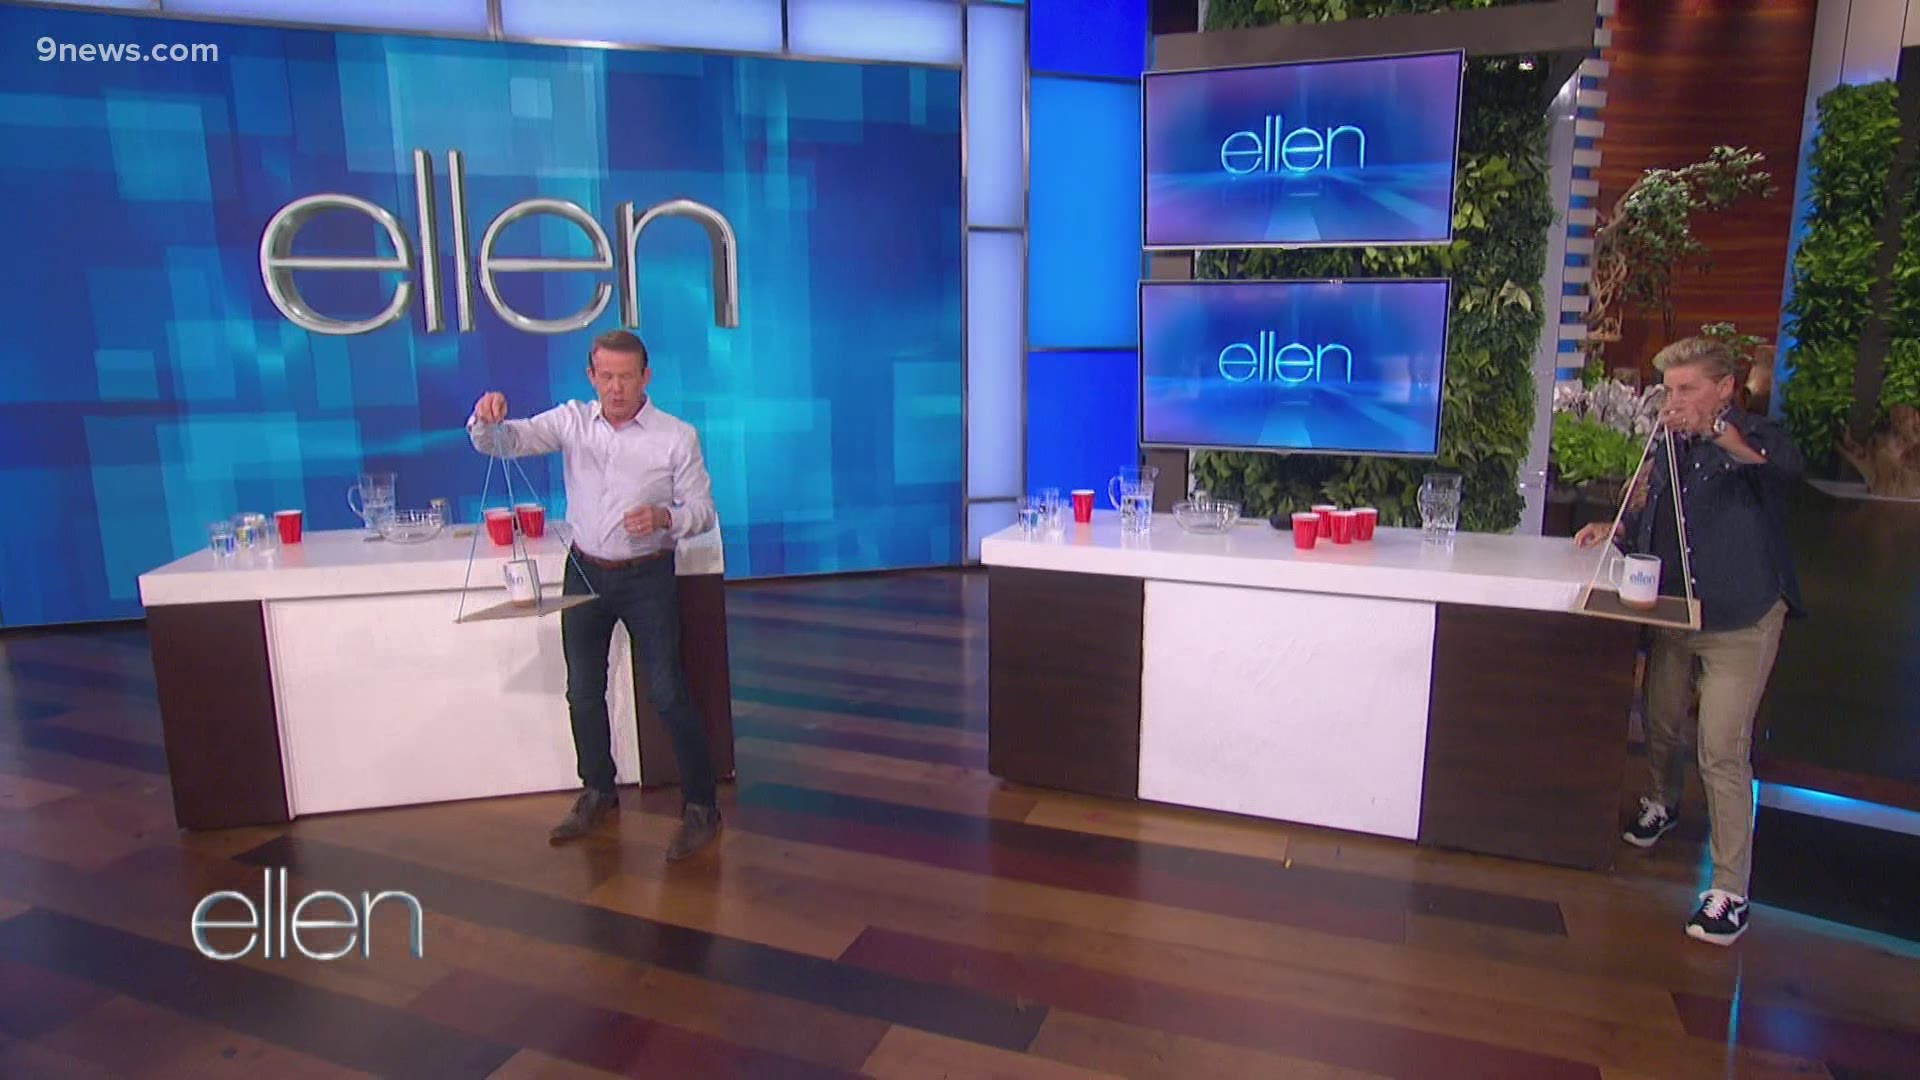 Steve Spangler shows off his science talents on the Ellen DeGeneres Show.